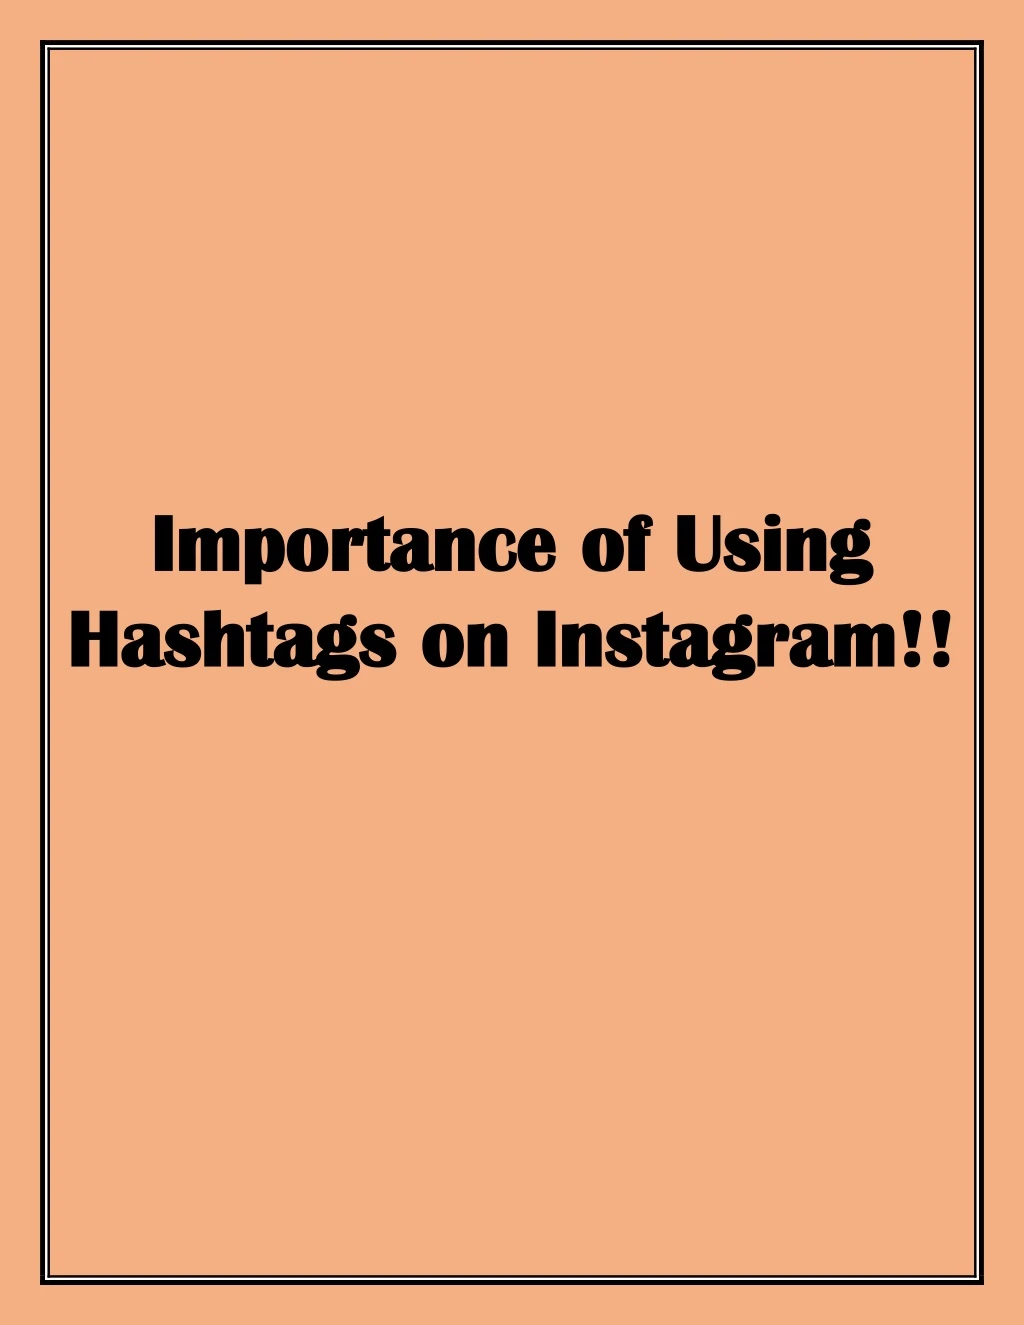 importance importance of using hashtags hashtags